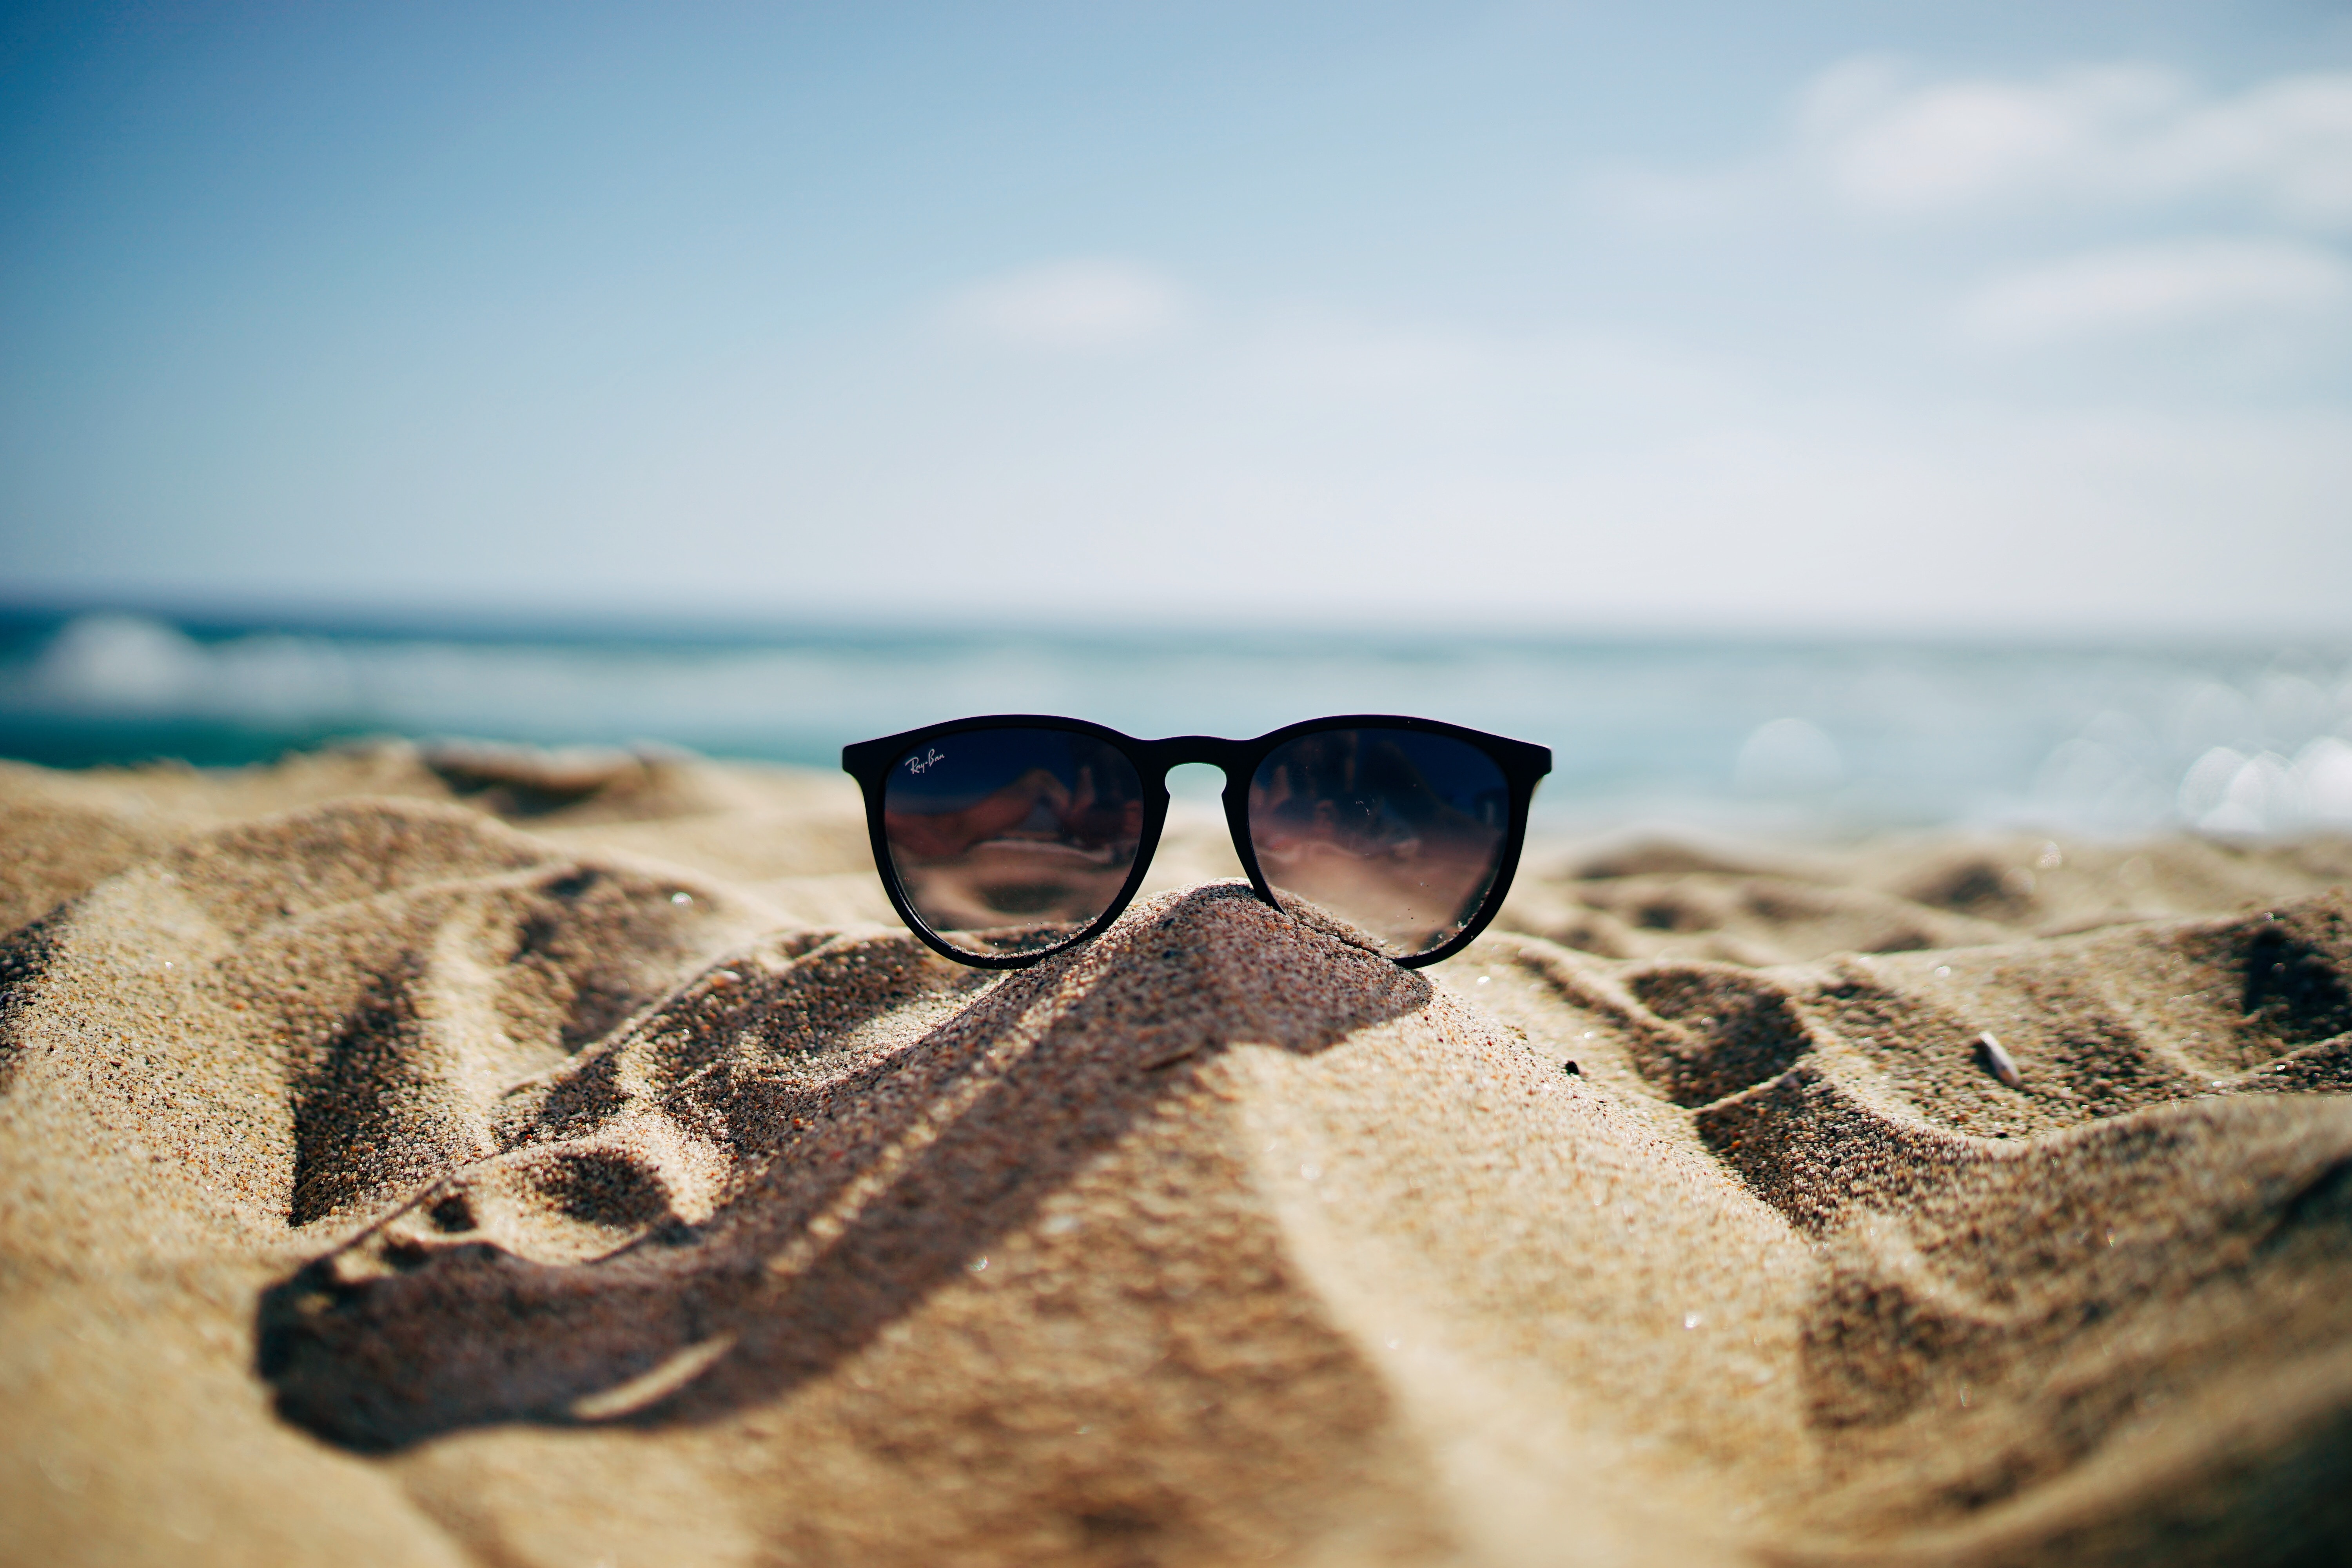 Sunglasses on the beach. │ Source: Unsplash